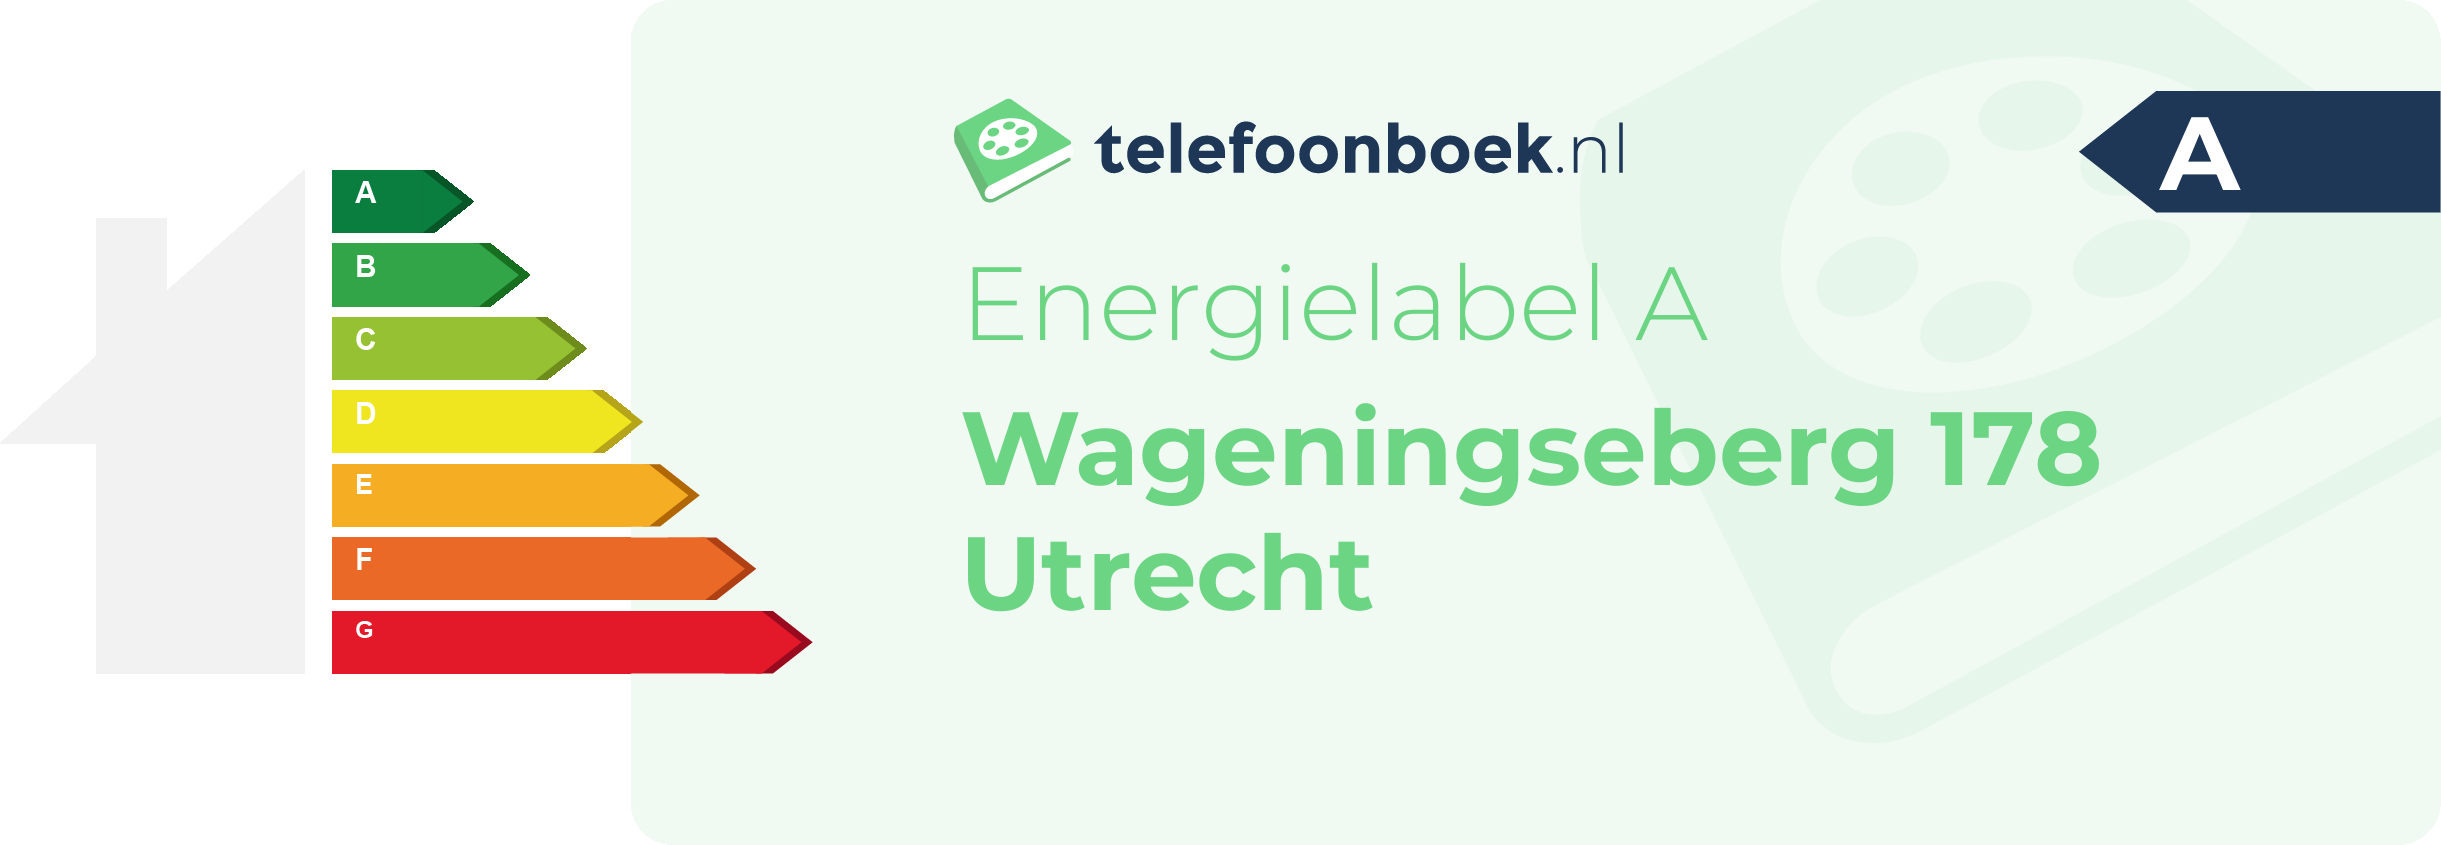 Energielabel Wageningseberg 178 Utrecht